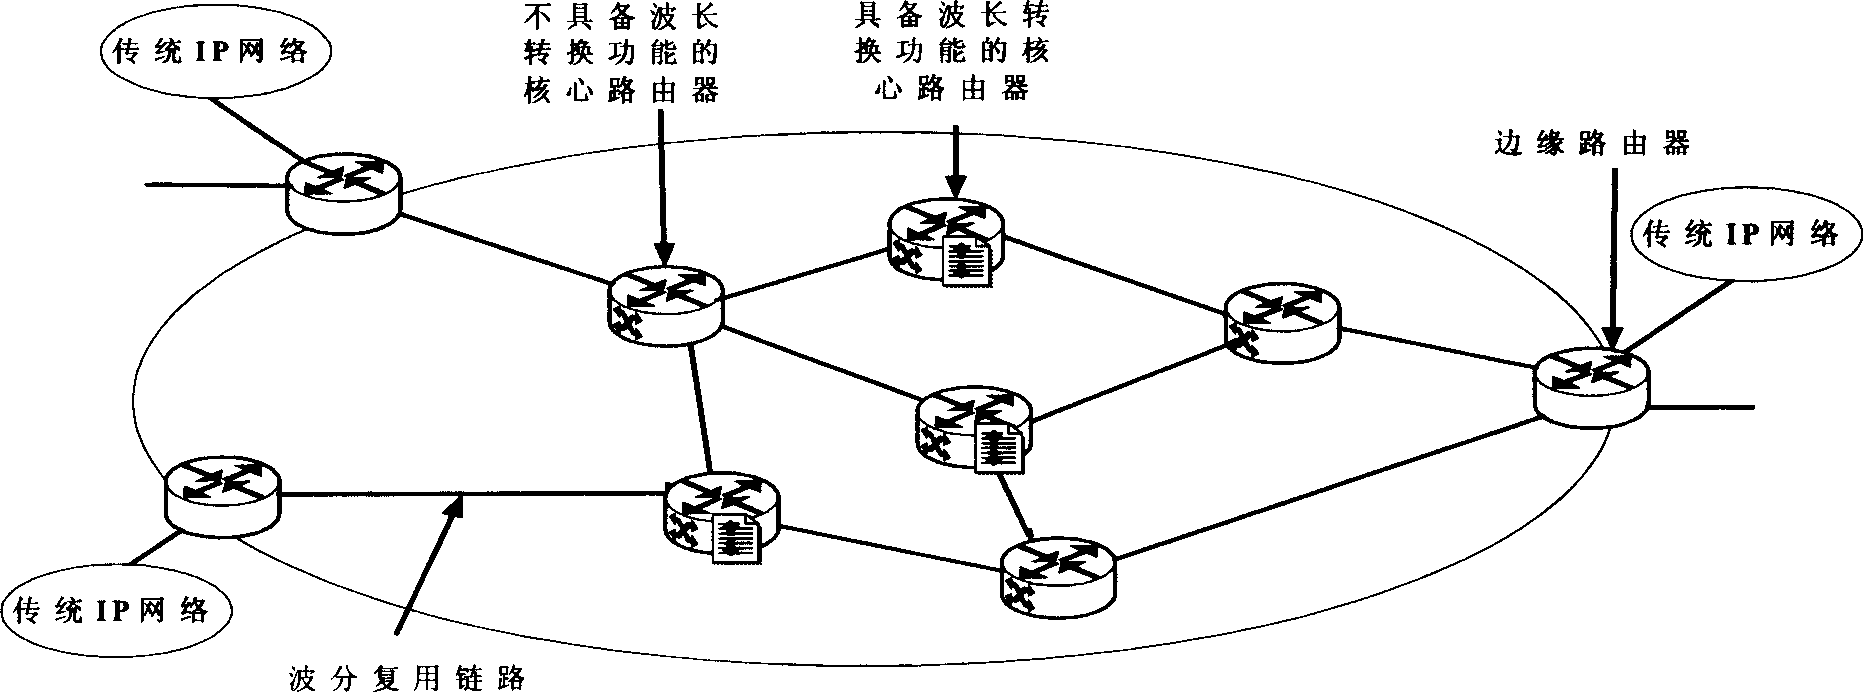 Method of light burst exchange network competitive solving method